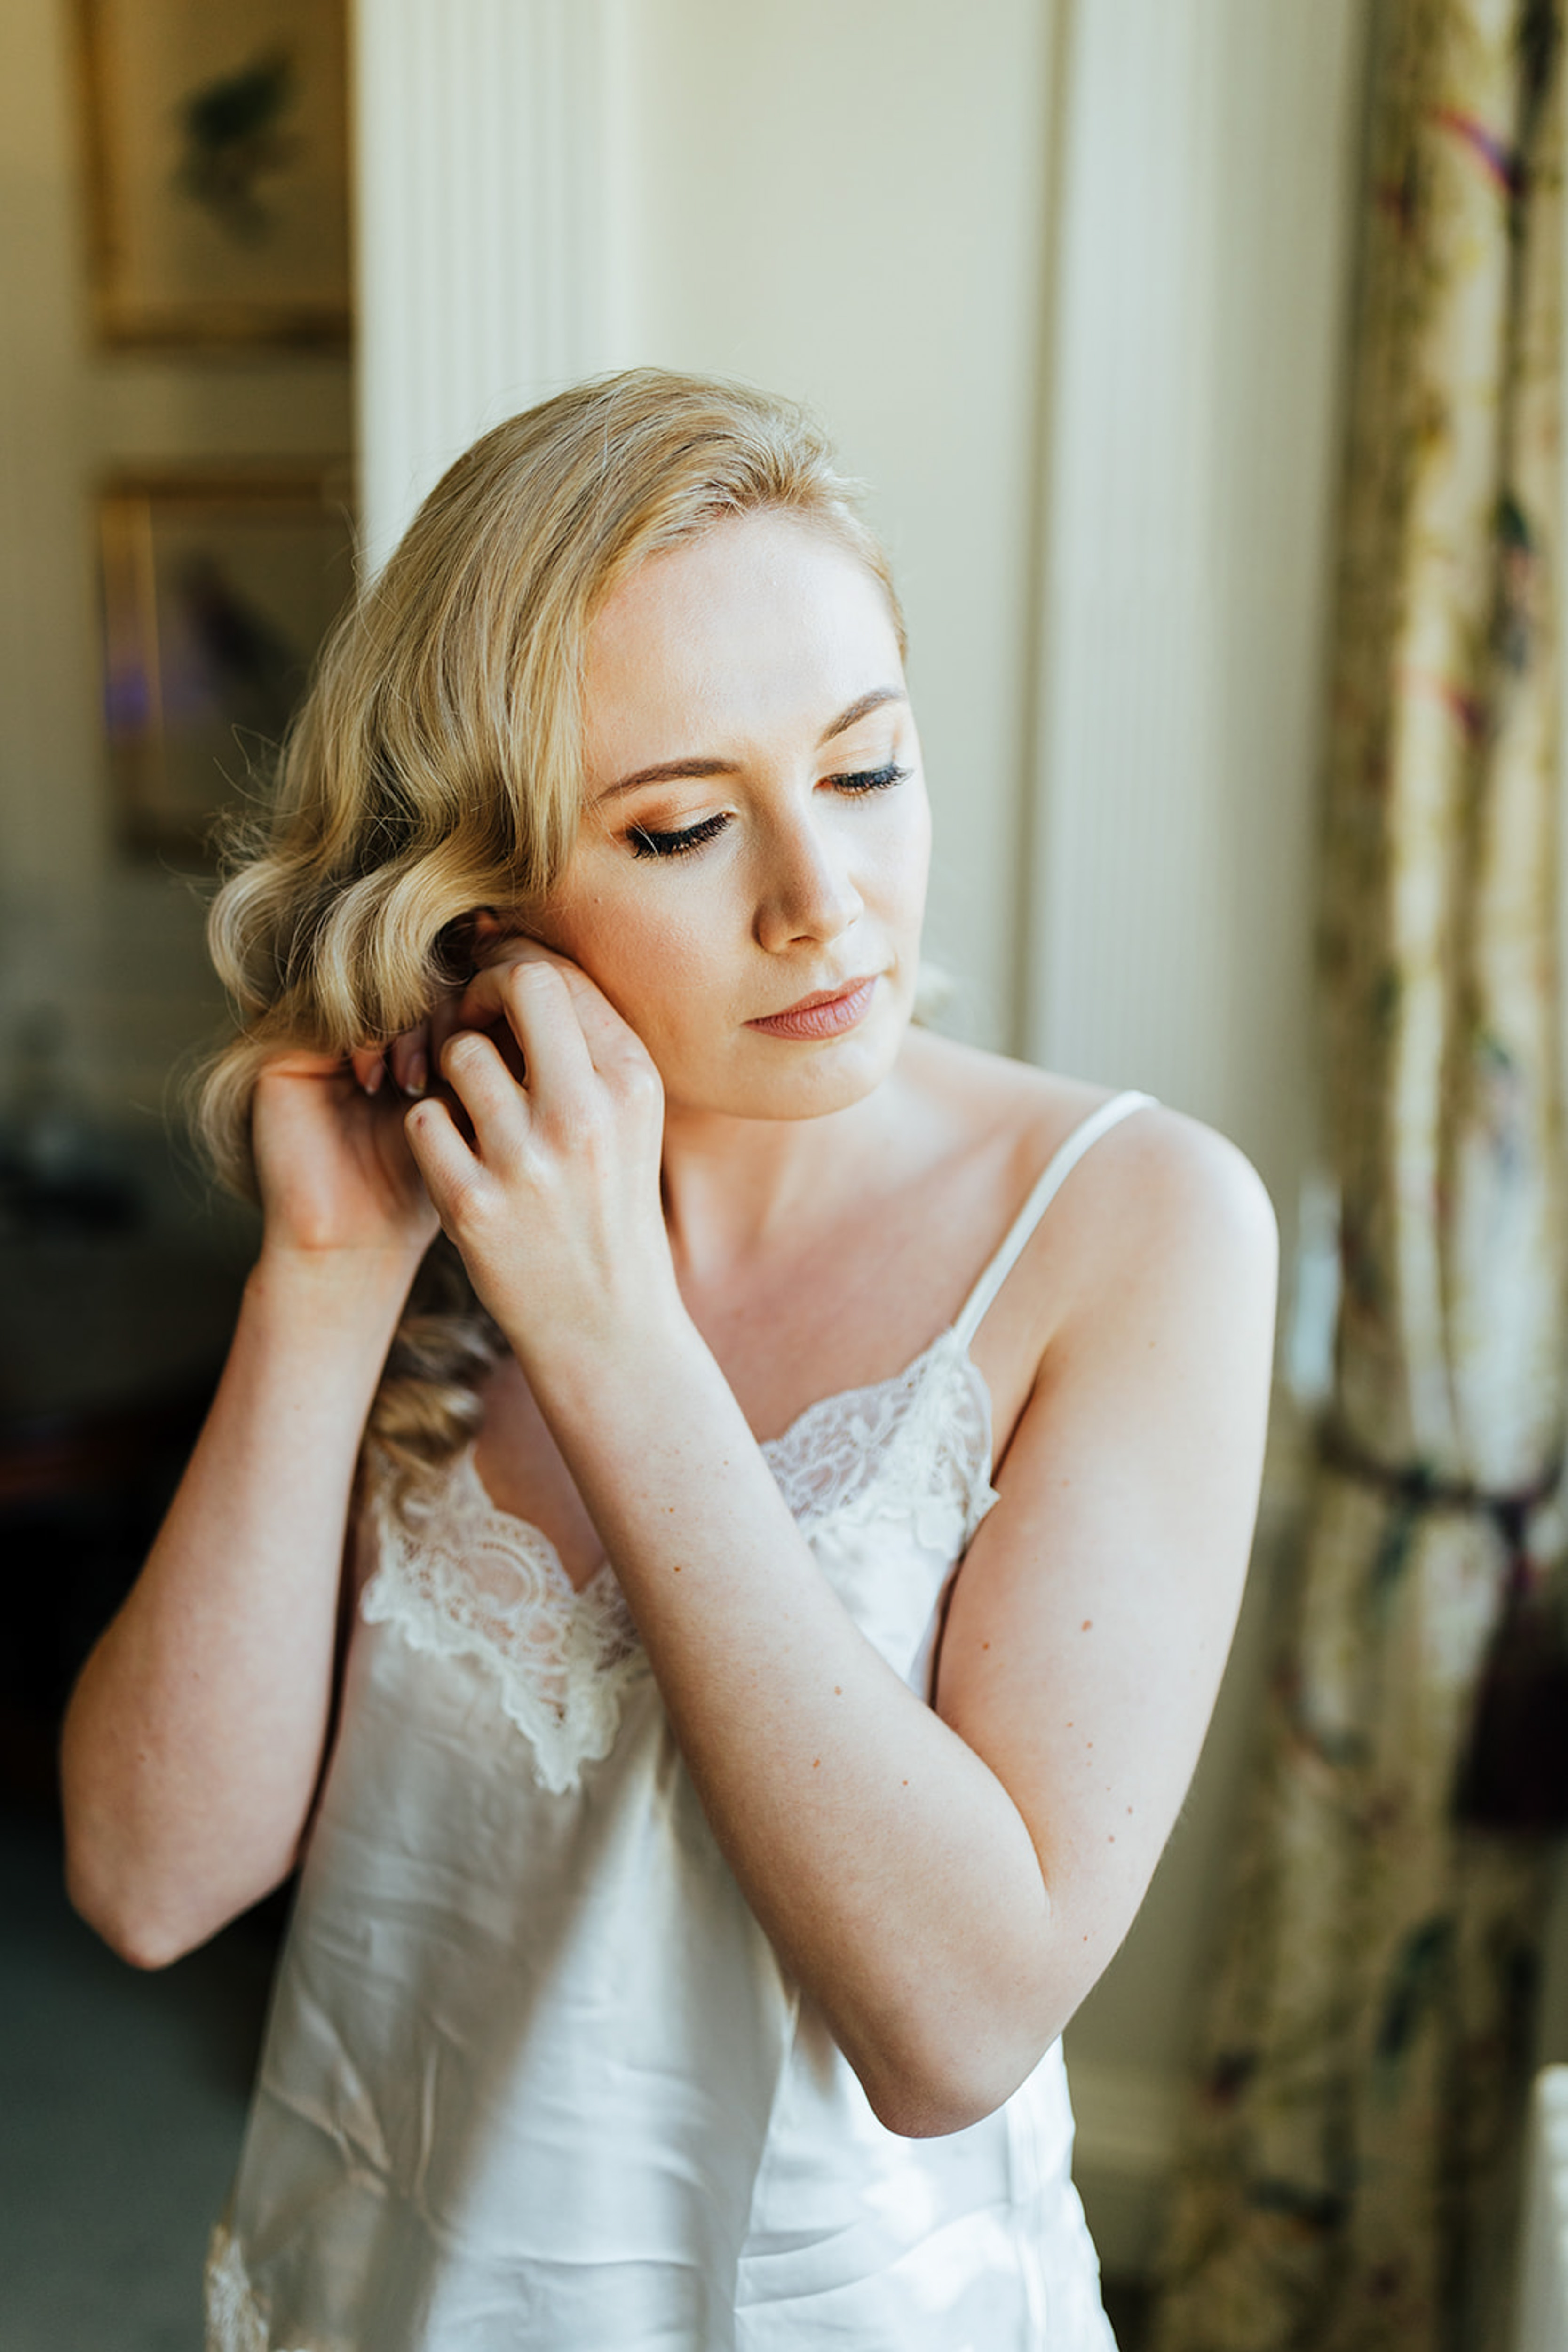 Bride Portrait during wedding morning preparations at Rushton Hall. UK Wedding Photographer. Aimee Joy Photography.